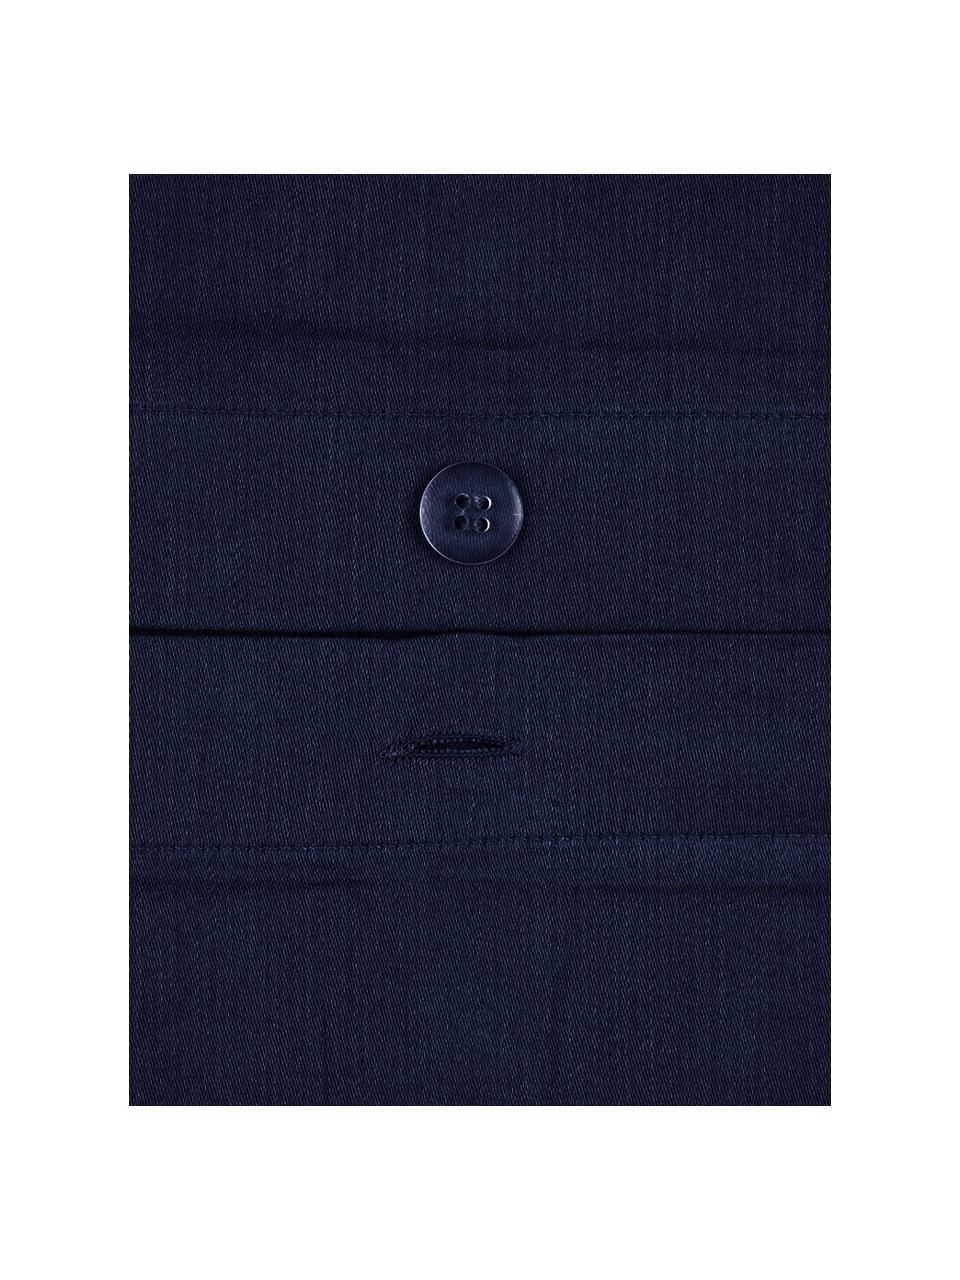 Baumwollsatin-Kissenbezug Comfort in Dunkelblau, 65 x 65 cm, Webart: Satin, leicht glänzend Fa, Dunkelblau, B 65 x L 65 cm